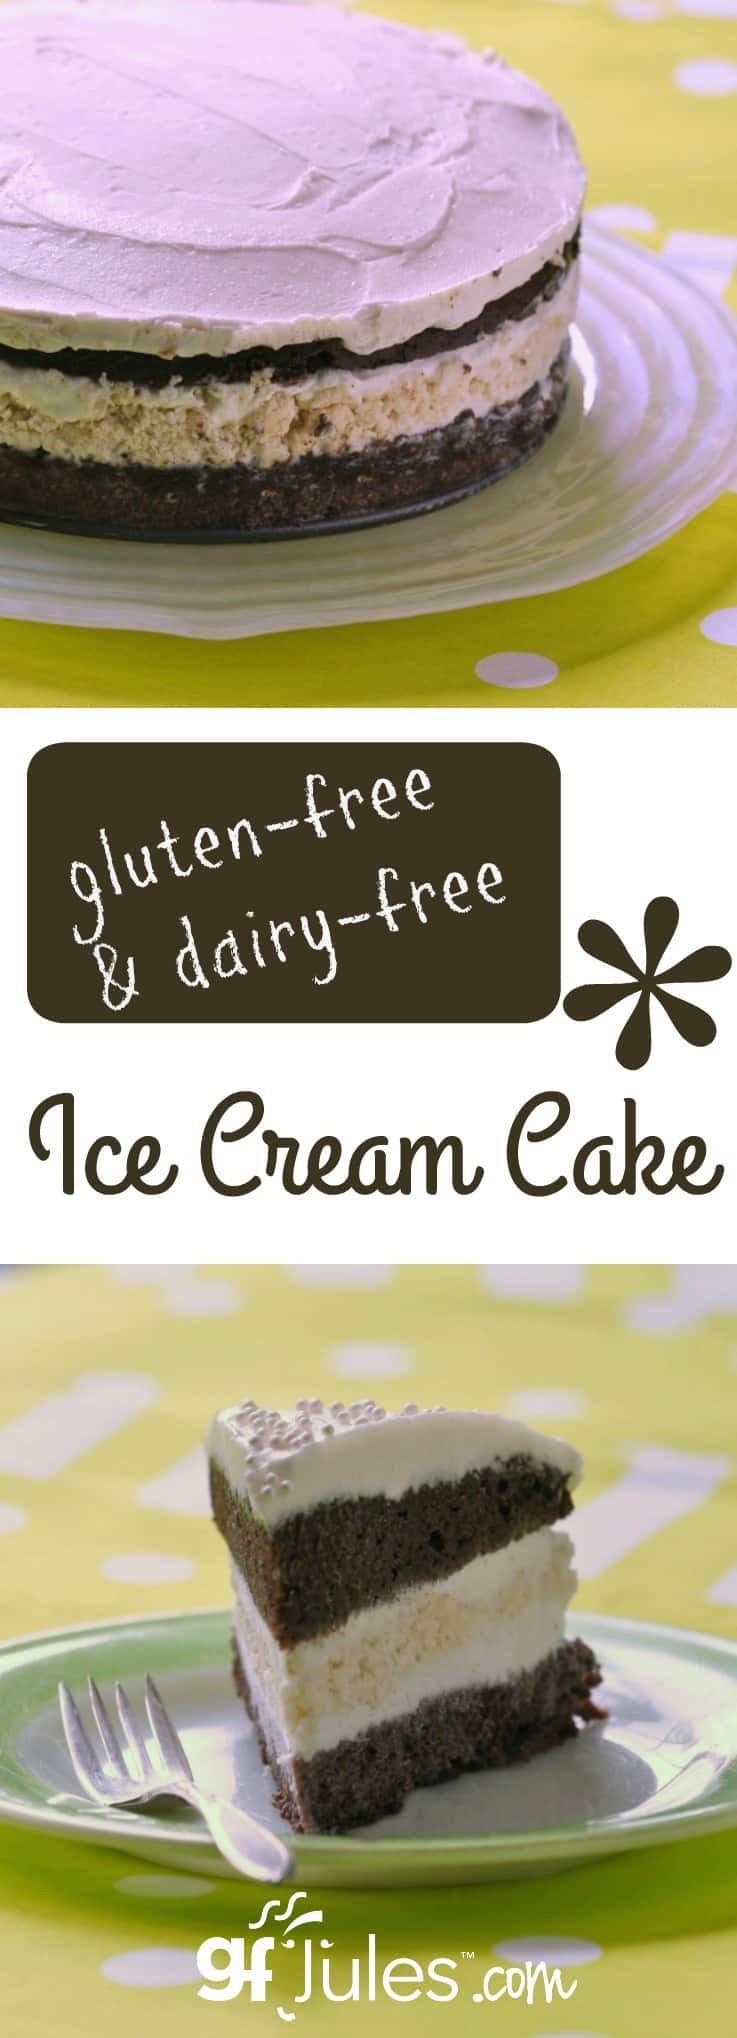 Gluten Free Ice Cream Cake Recipe
 Gluten Free Ice Cream Cake Recipe from award winning gfJules